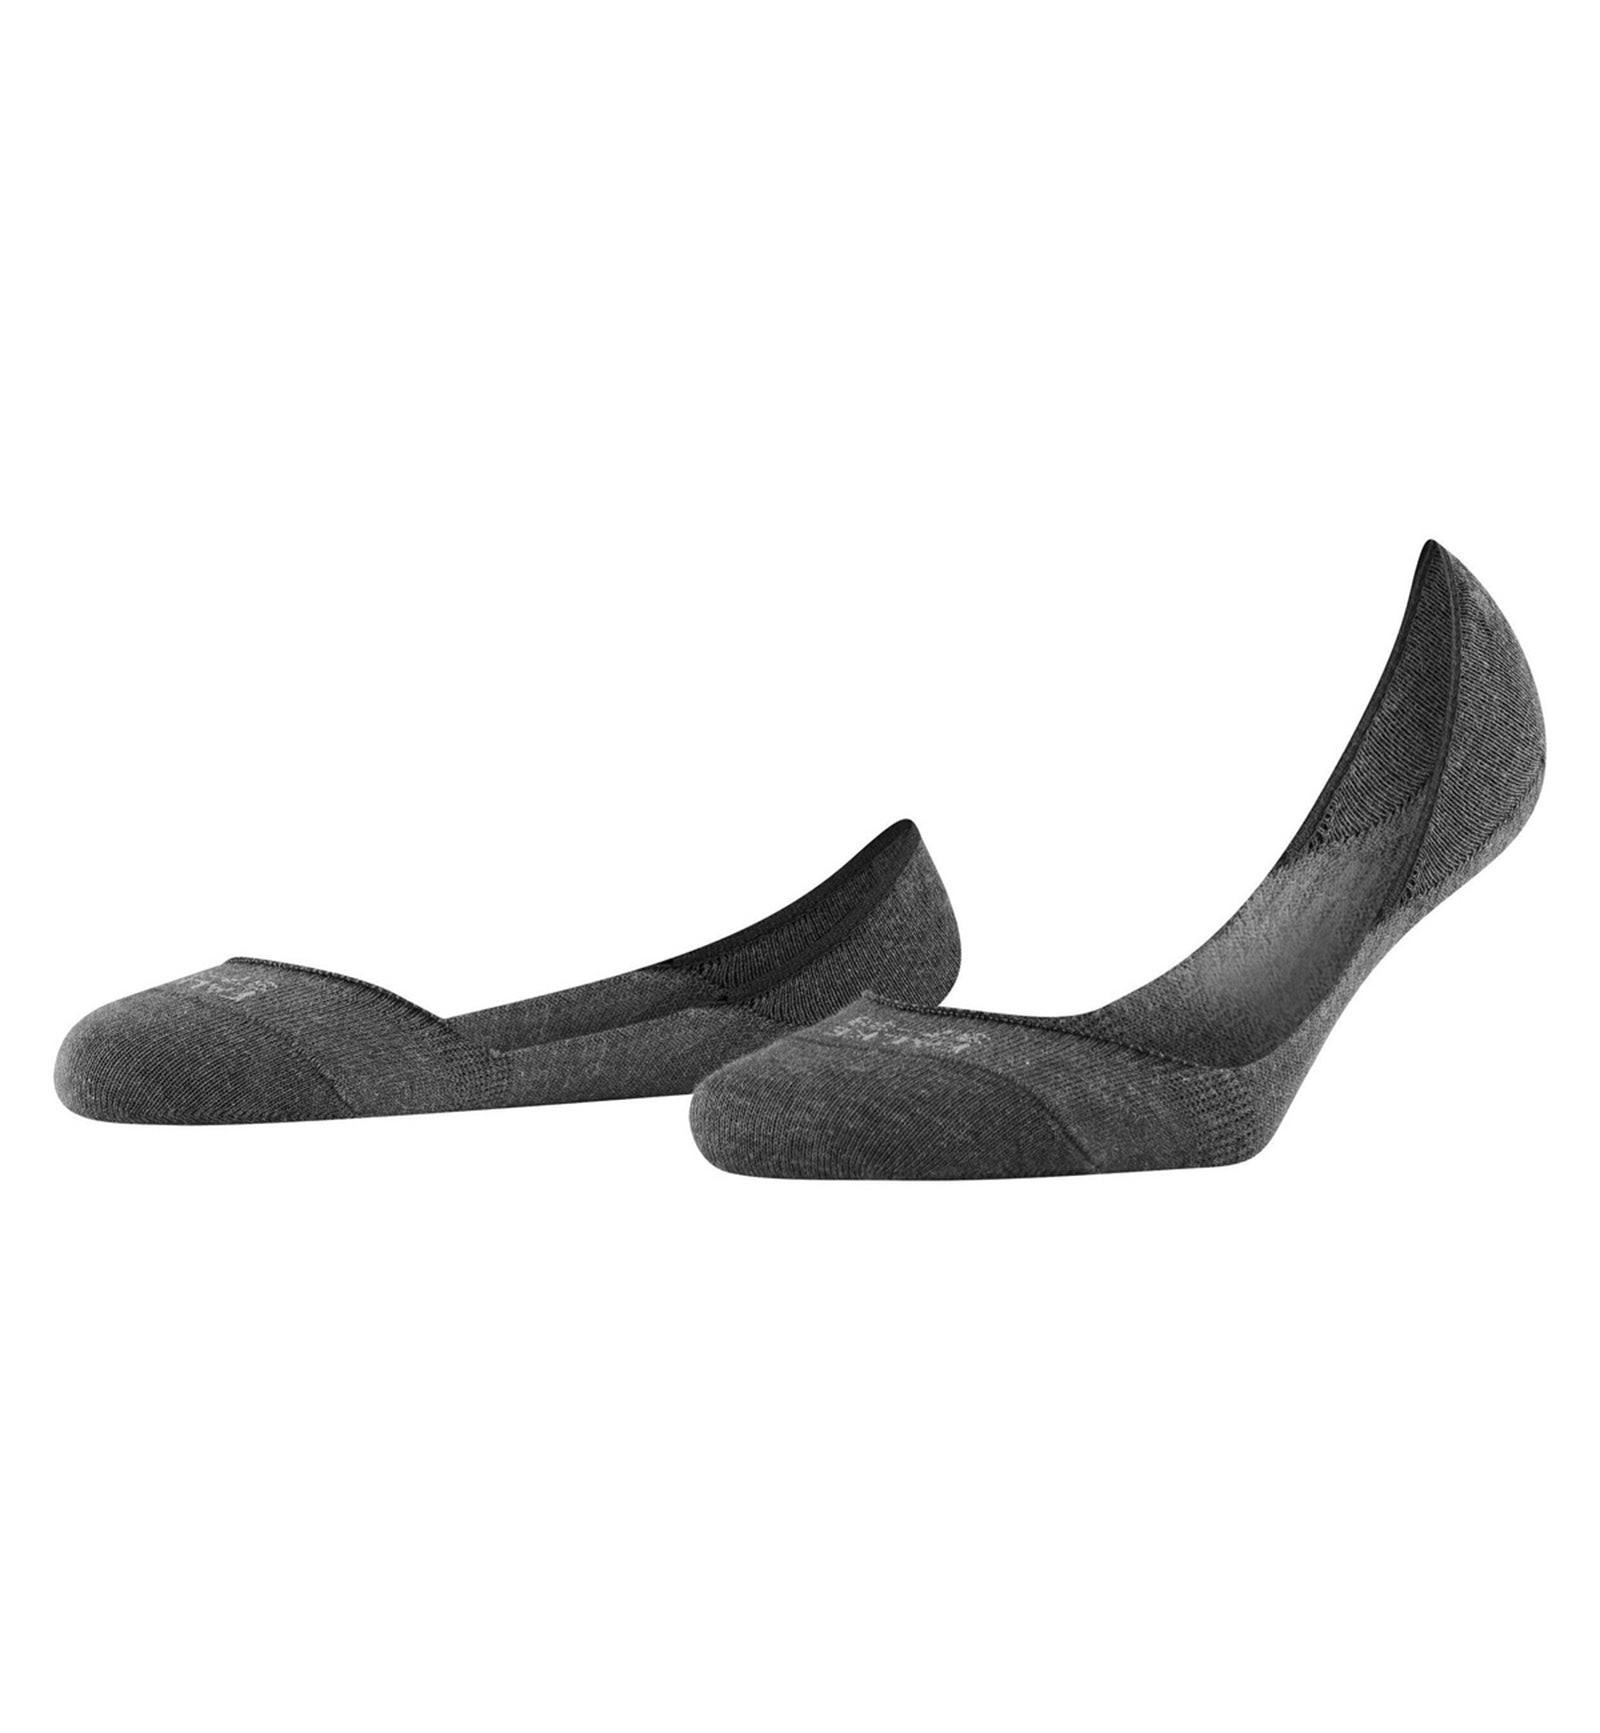 FALKE Step Invisible No-Show Socks (46492),6.5/7.5,Black - Black,6.5/7.5